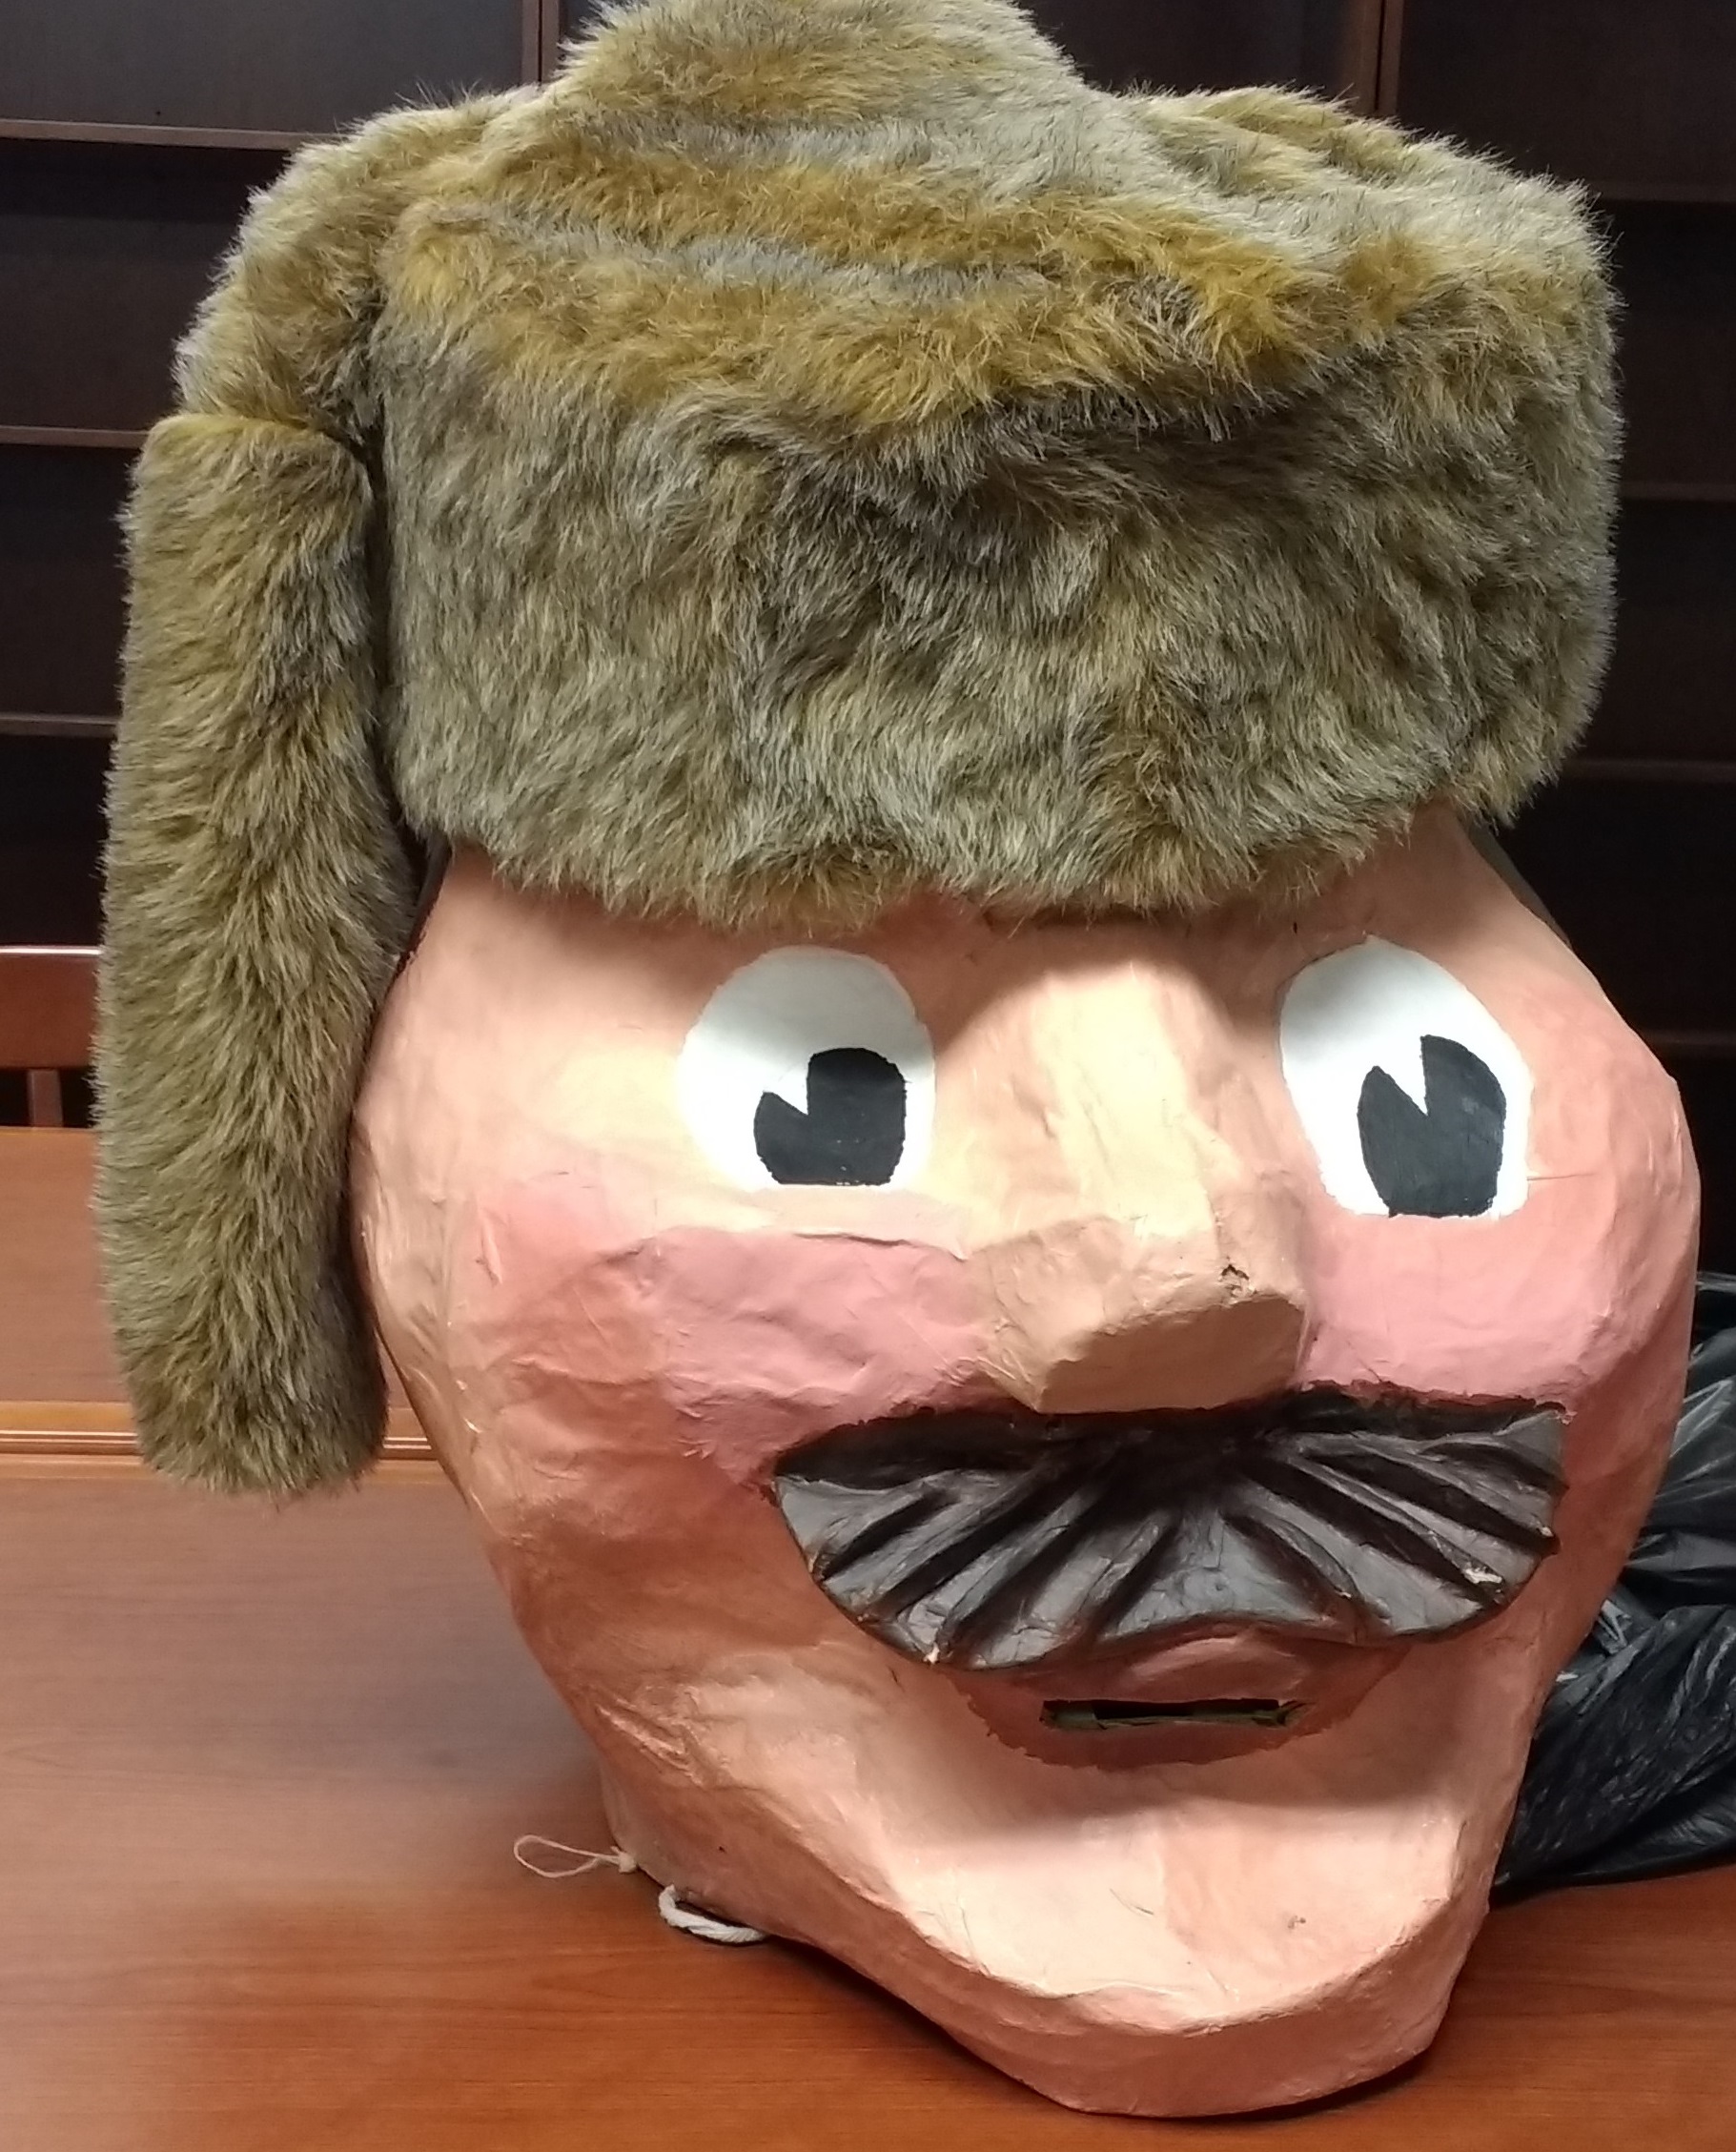 The paper mache head of the Pioneer Pete mascot.